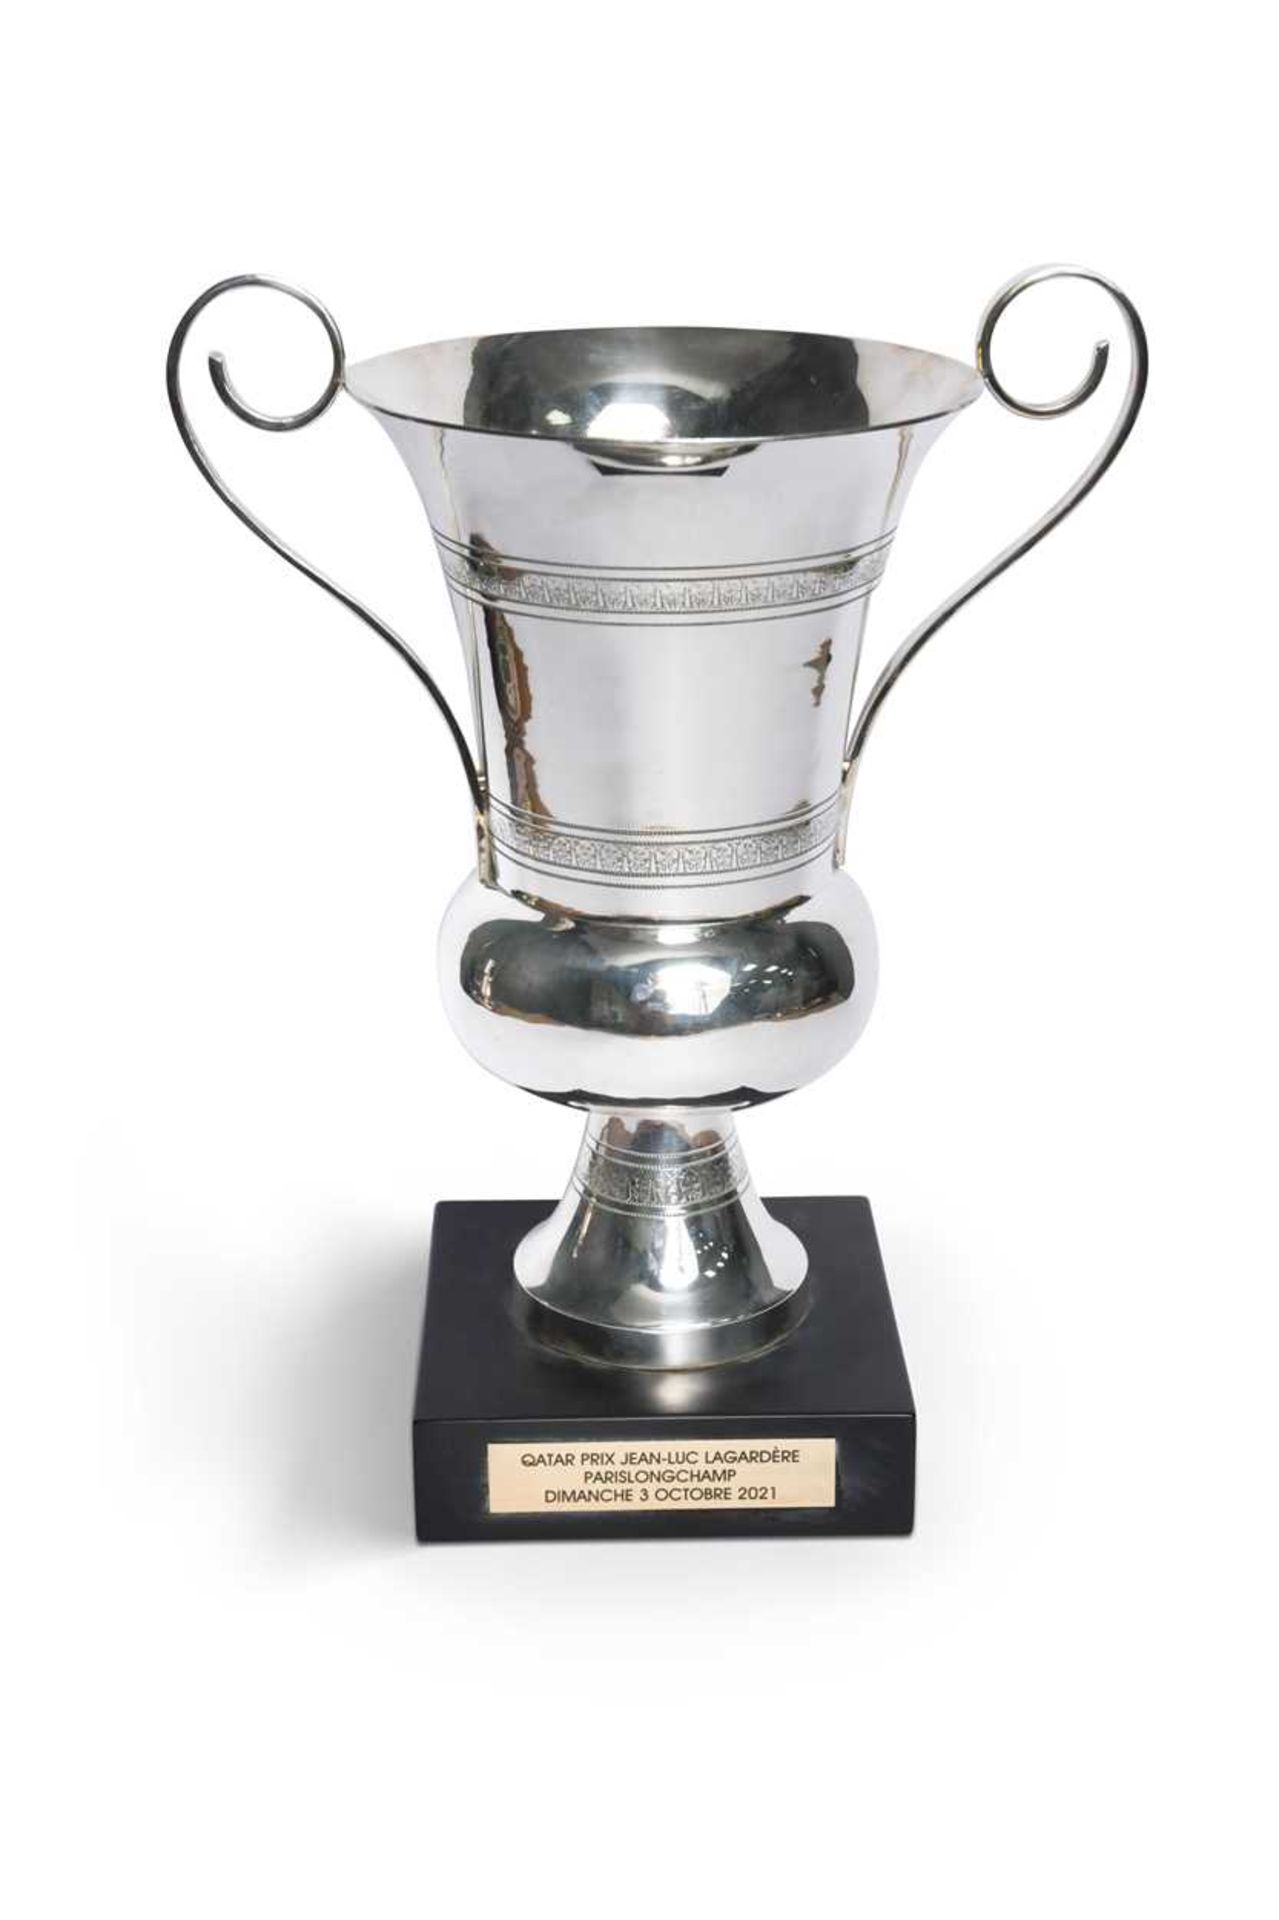 A Qatar Prix Jean-Luc Lagardére trophy, awarded to Frankie Dettori,